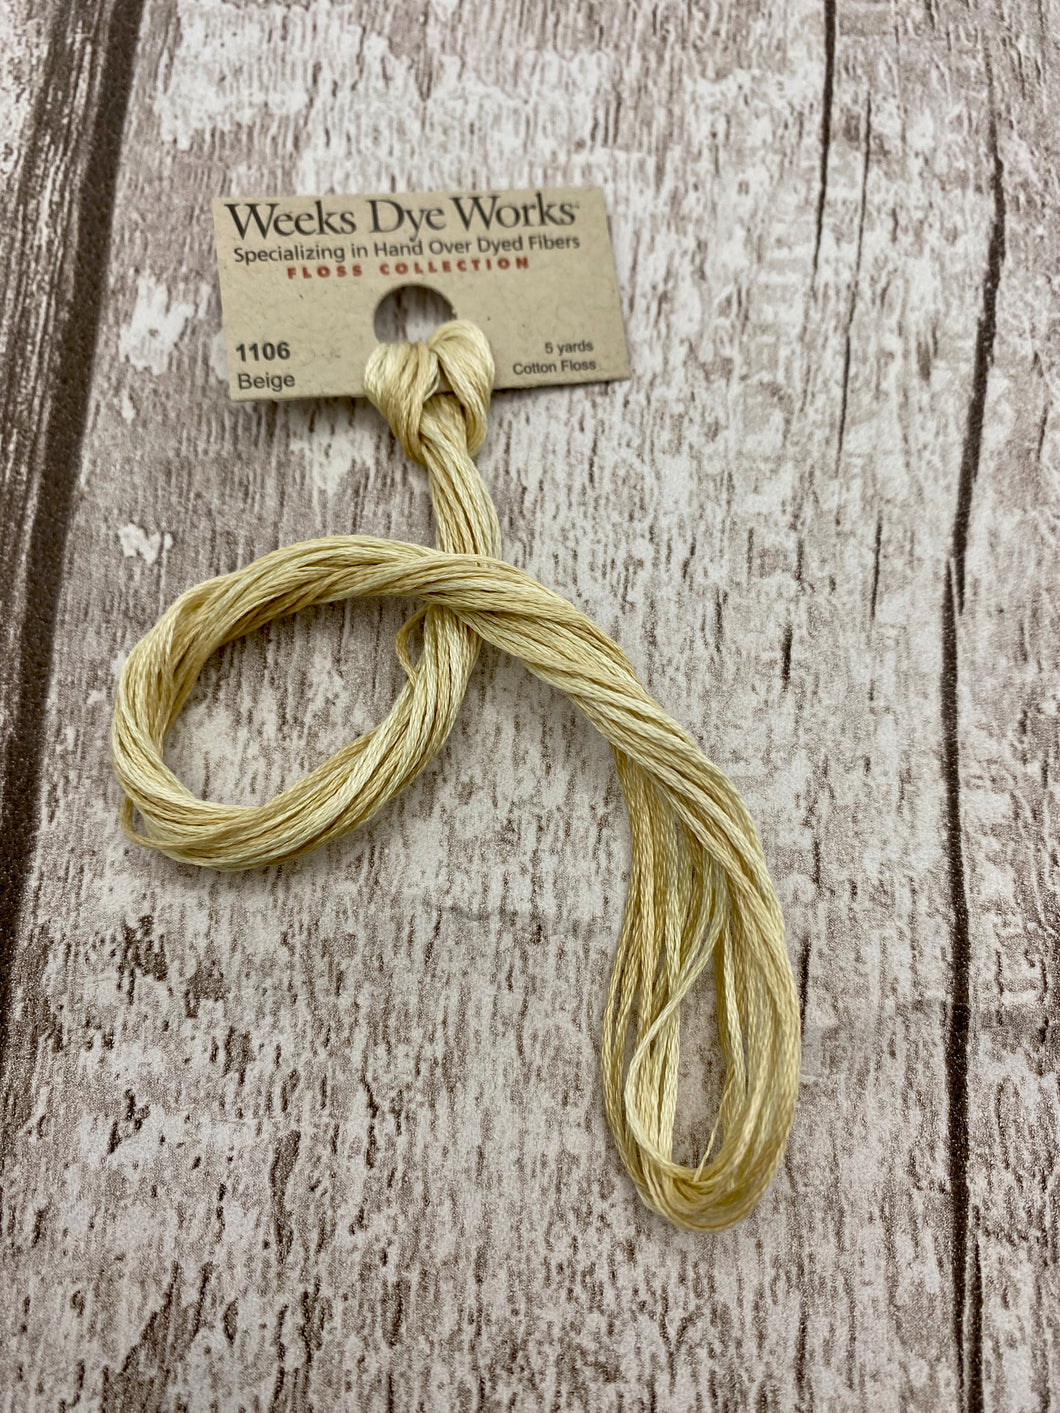 Beige (#1106) Weeks Dye Works 6-strand cotton floss